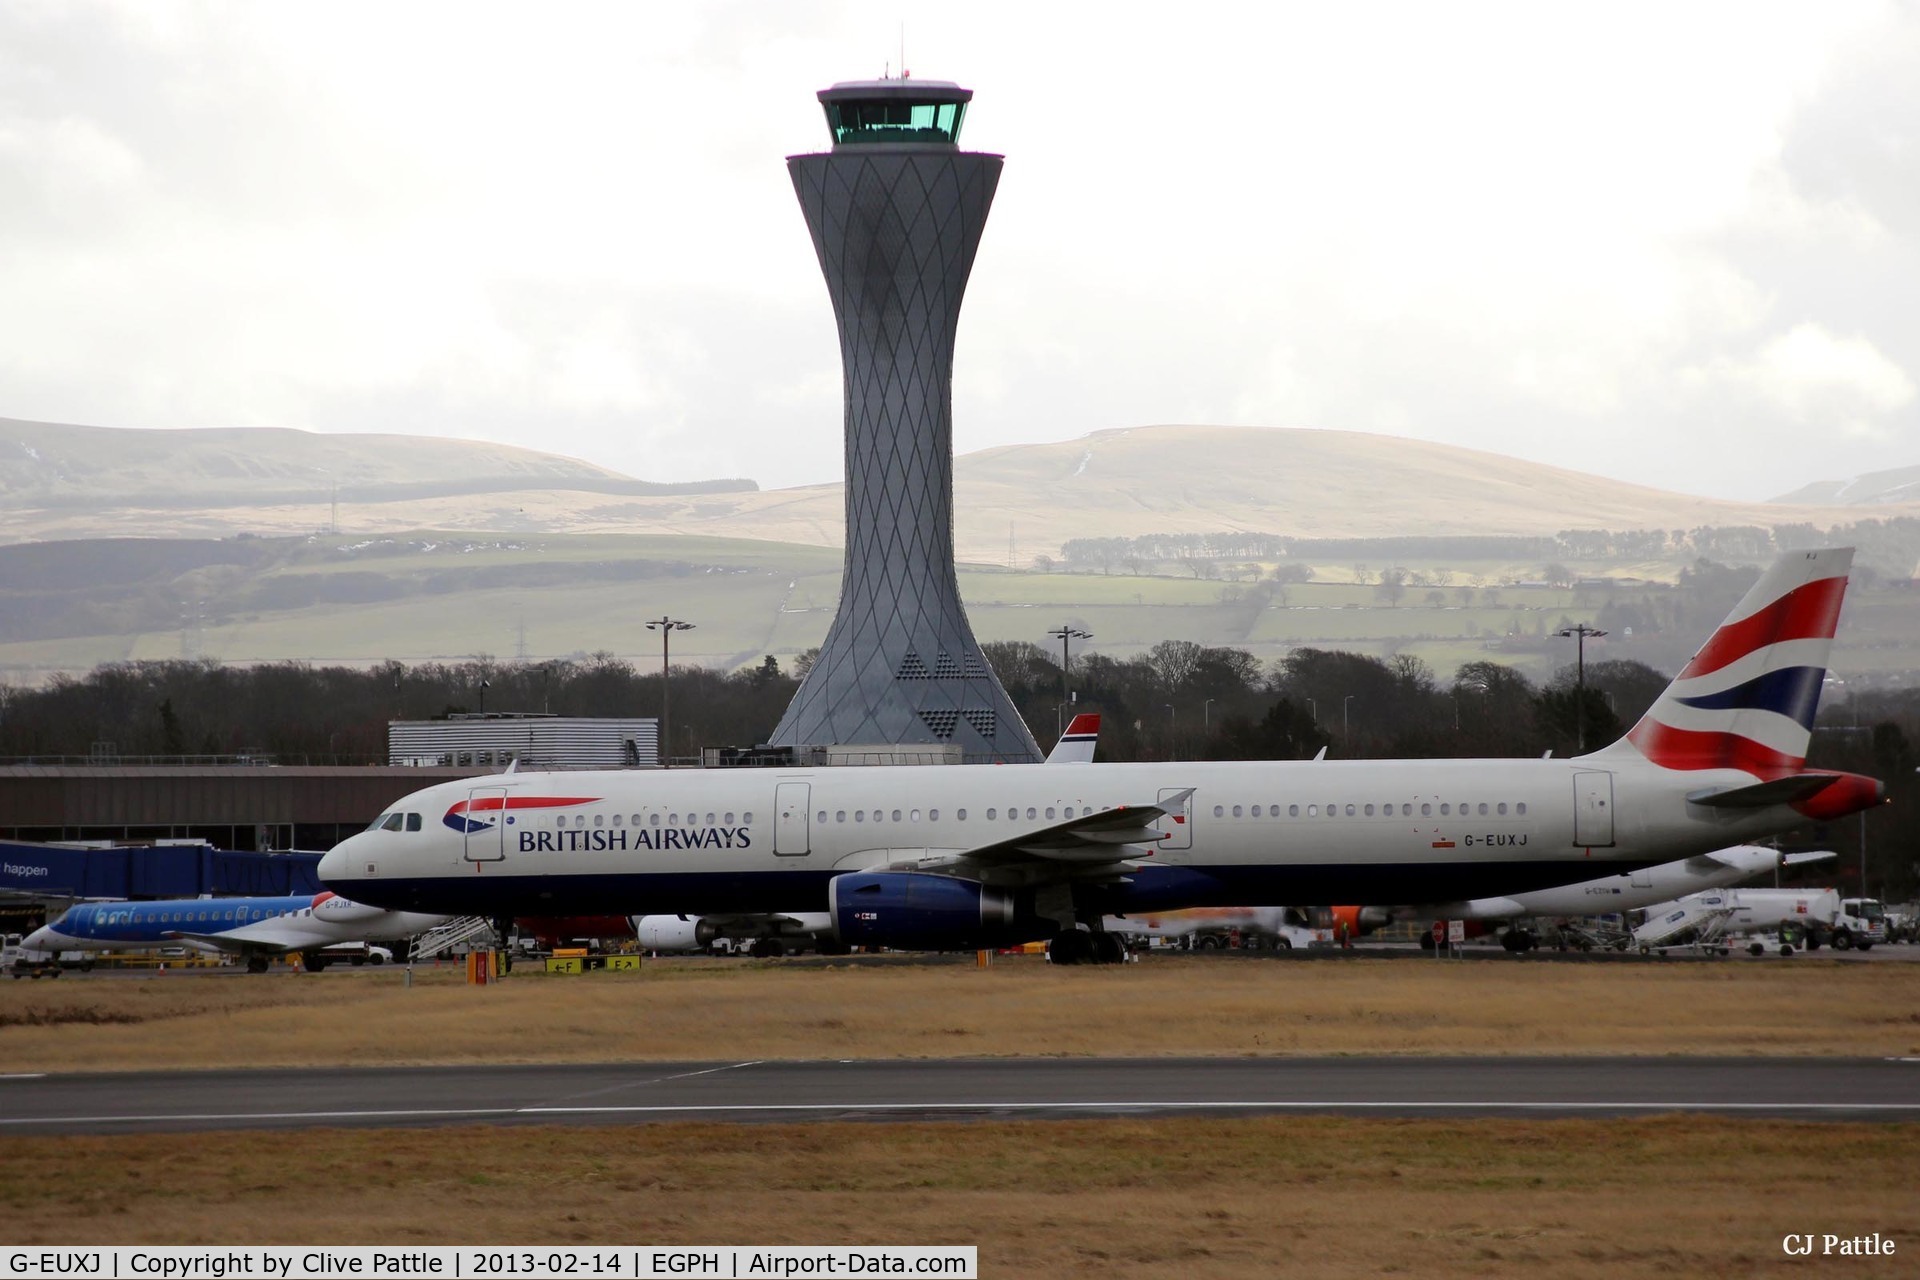 G-EUXJ, 2007 Airbus A321-231 C/N 3081, Departing the gates at Edinburgh